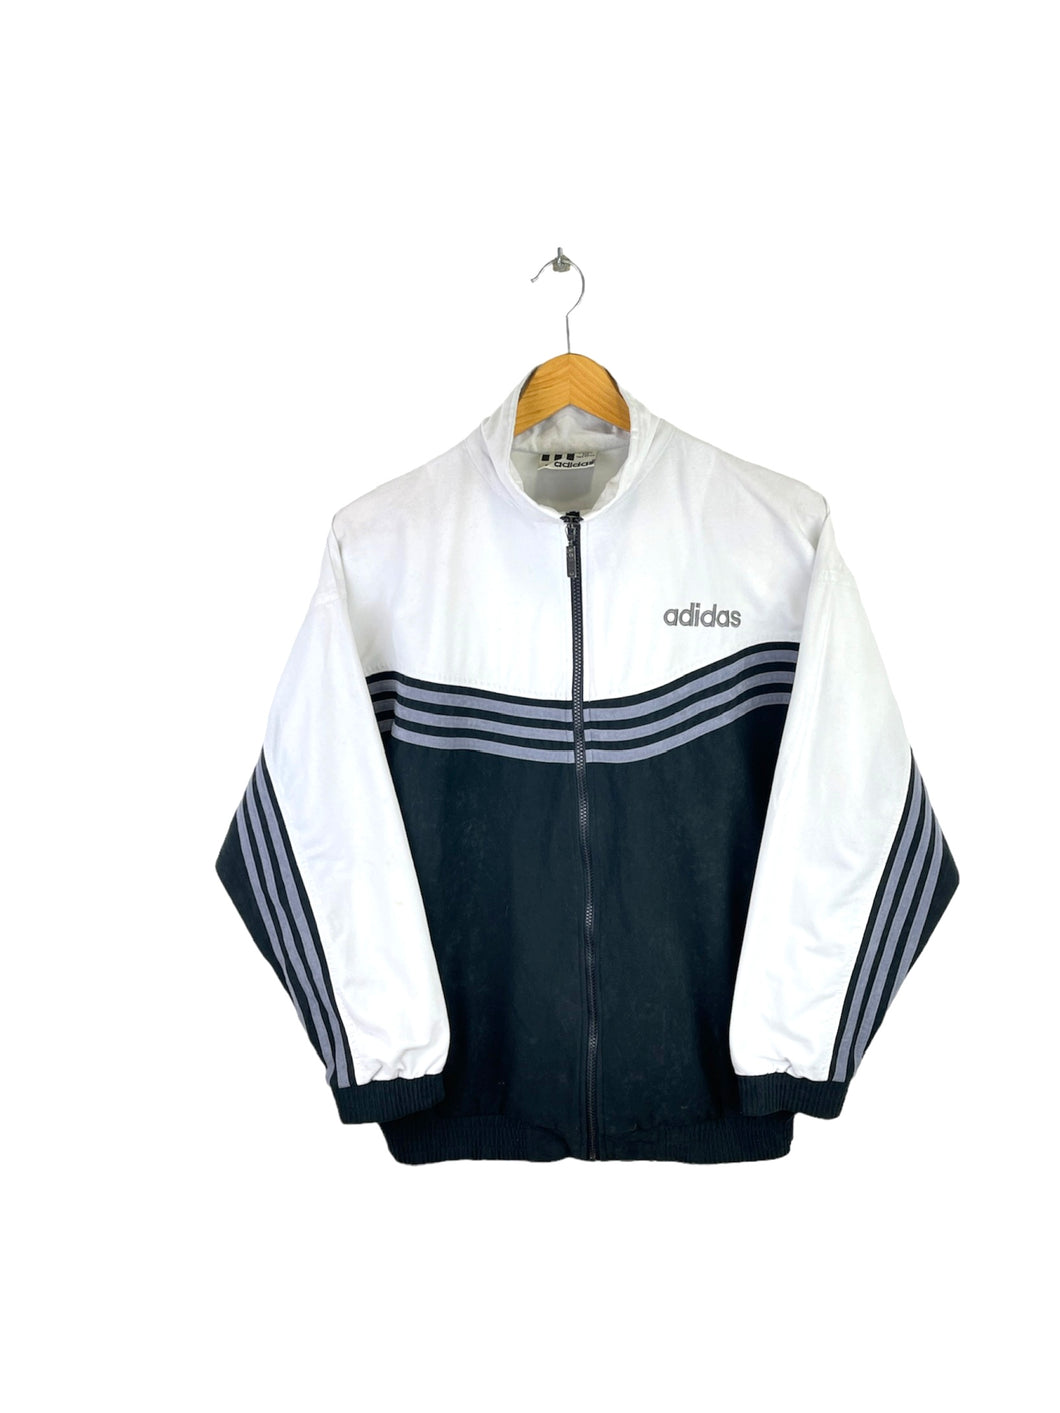 Adidas Velvet Jacket - Small